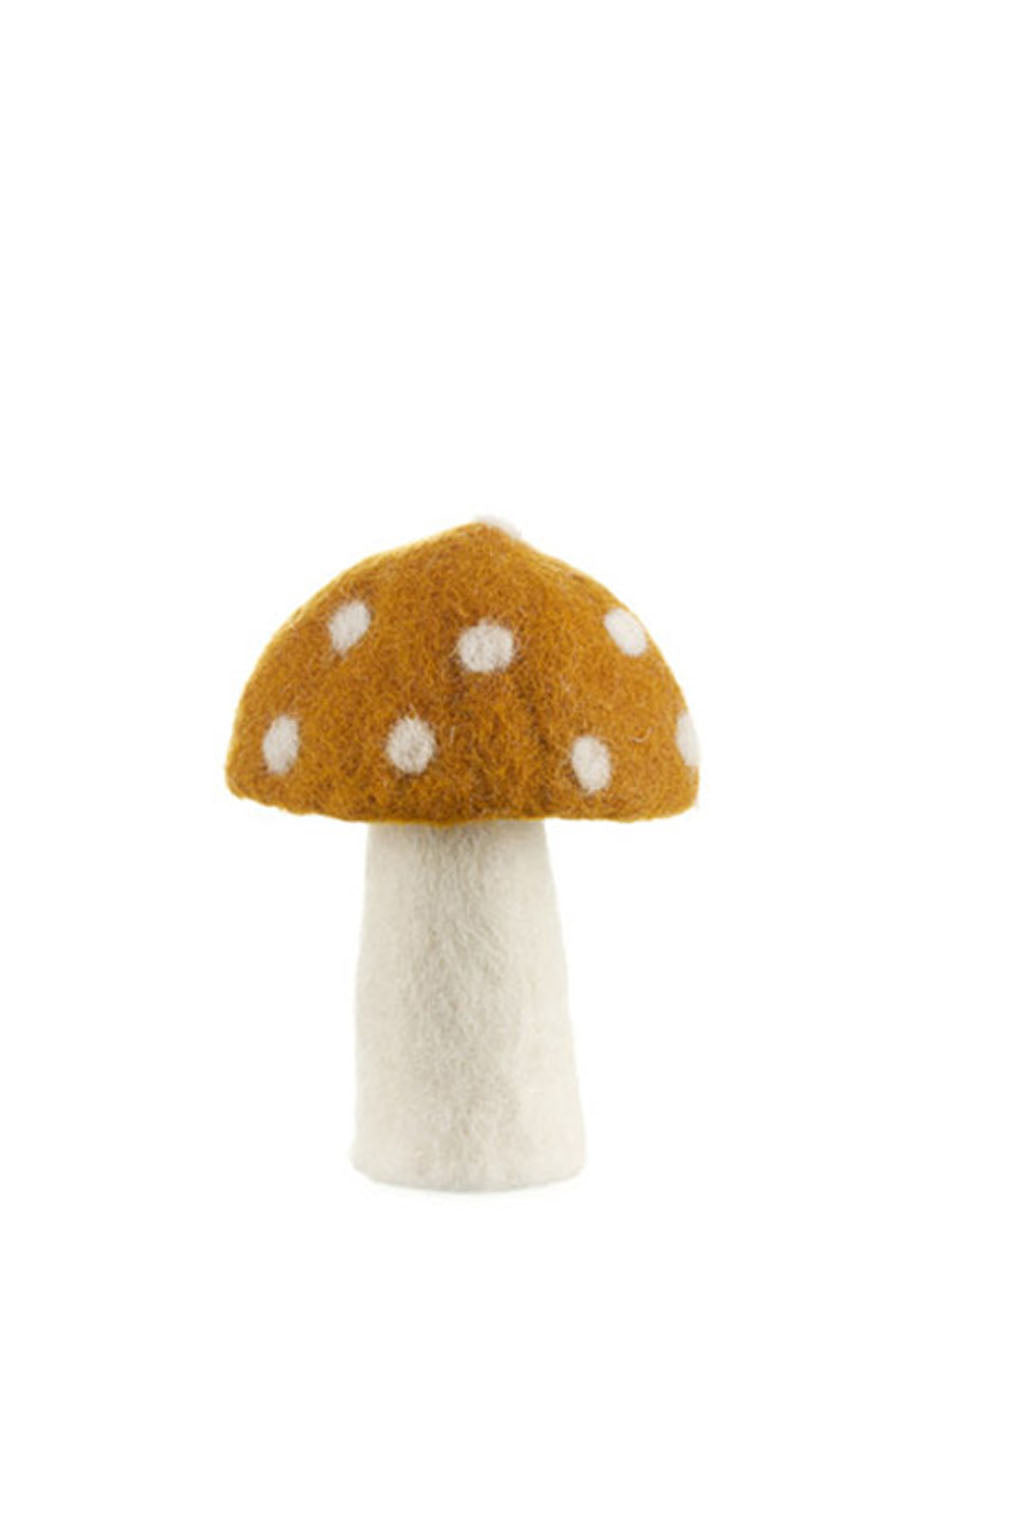 Dotty Mushroom - Extra Large 13cm